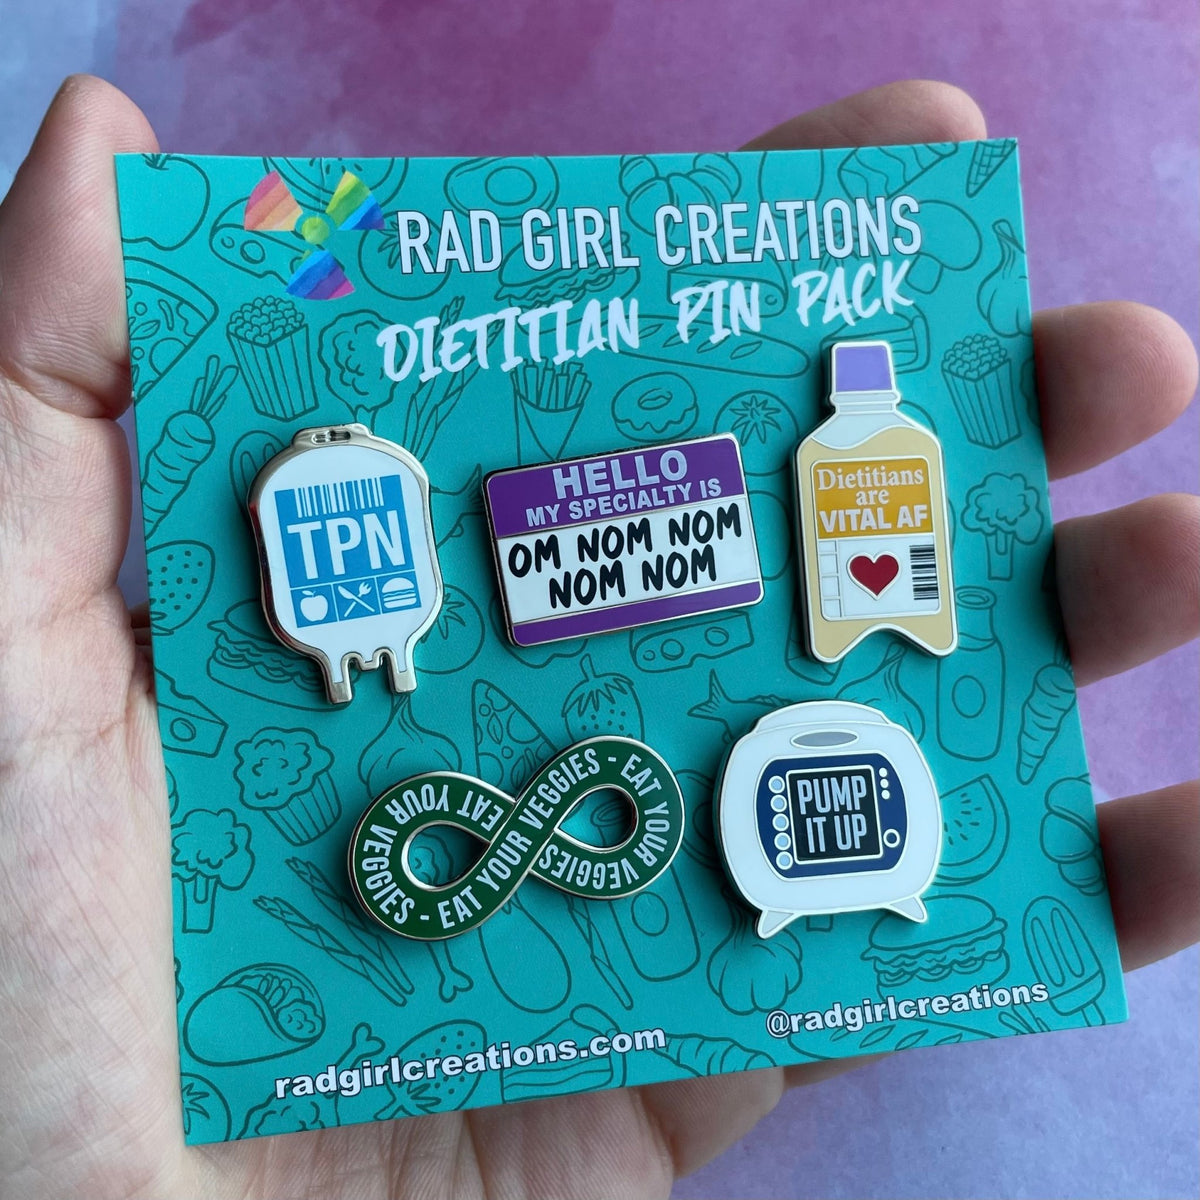 Dietitian Pin Pack - Rad Girl Creations